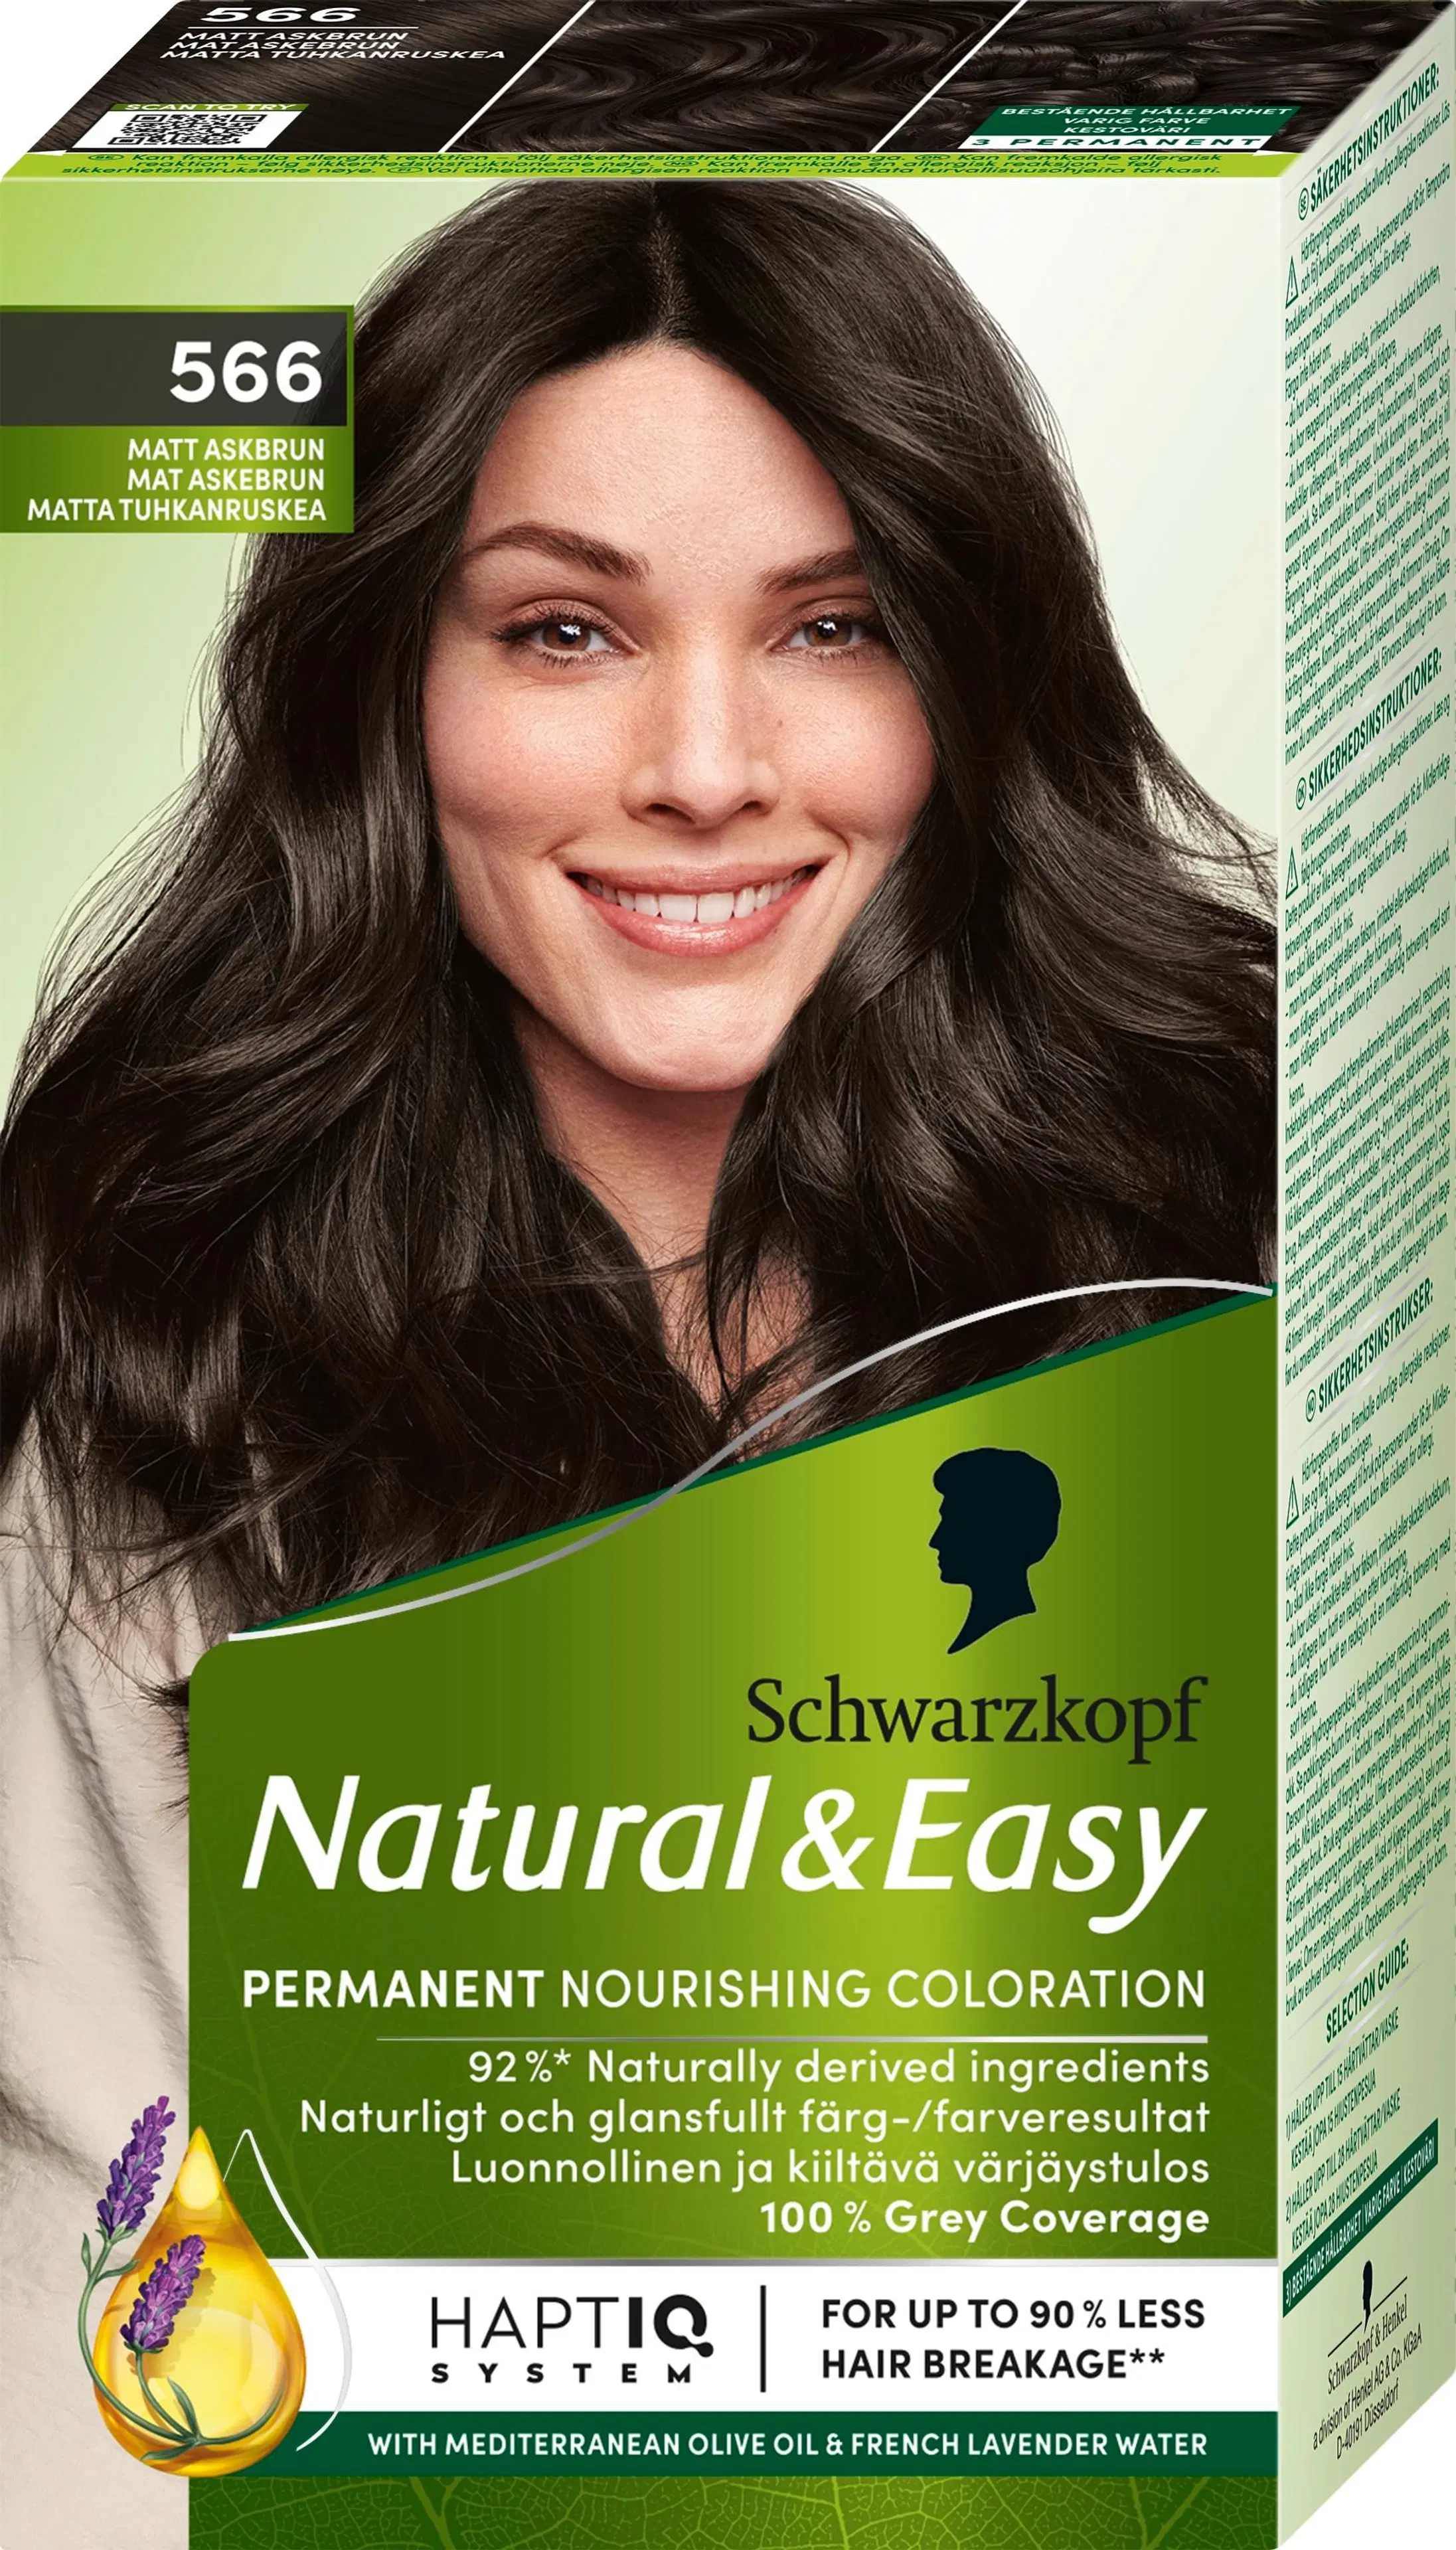 Schwarzkopf Natural & Easy 566 Matta Tuhkanruskea hiusväri